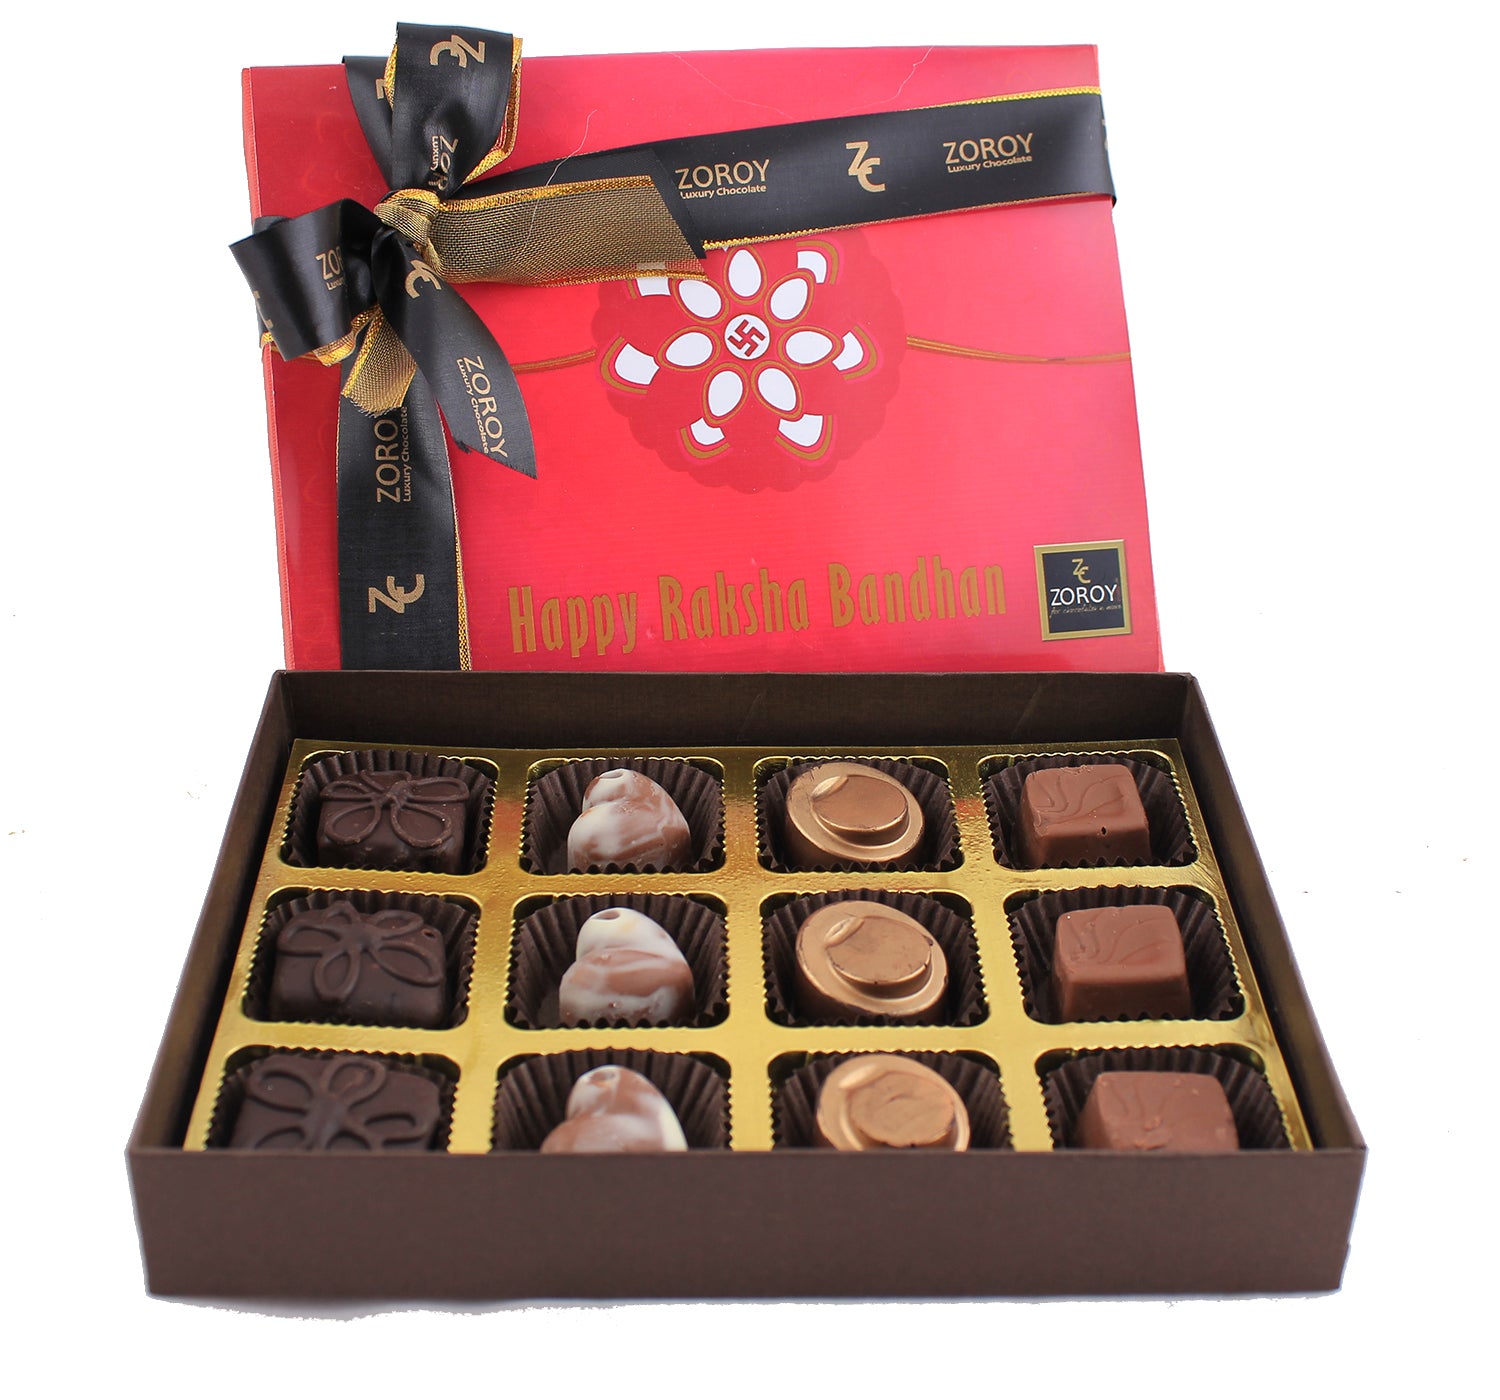 ZOROY Luxury Chocolate Rakhi Chocolate Gift for Brother | Rakhi Gift for Brother / Bhabhi |Rakhshabandhan gift for sister| Rakhi gift combo | rakhi chocolate pack | Complimentary Rakhi | 12 chocolates